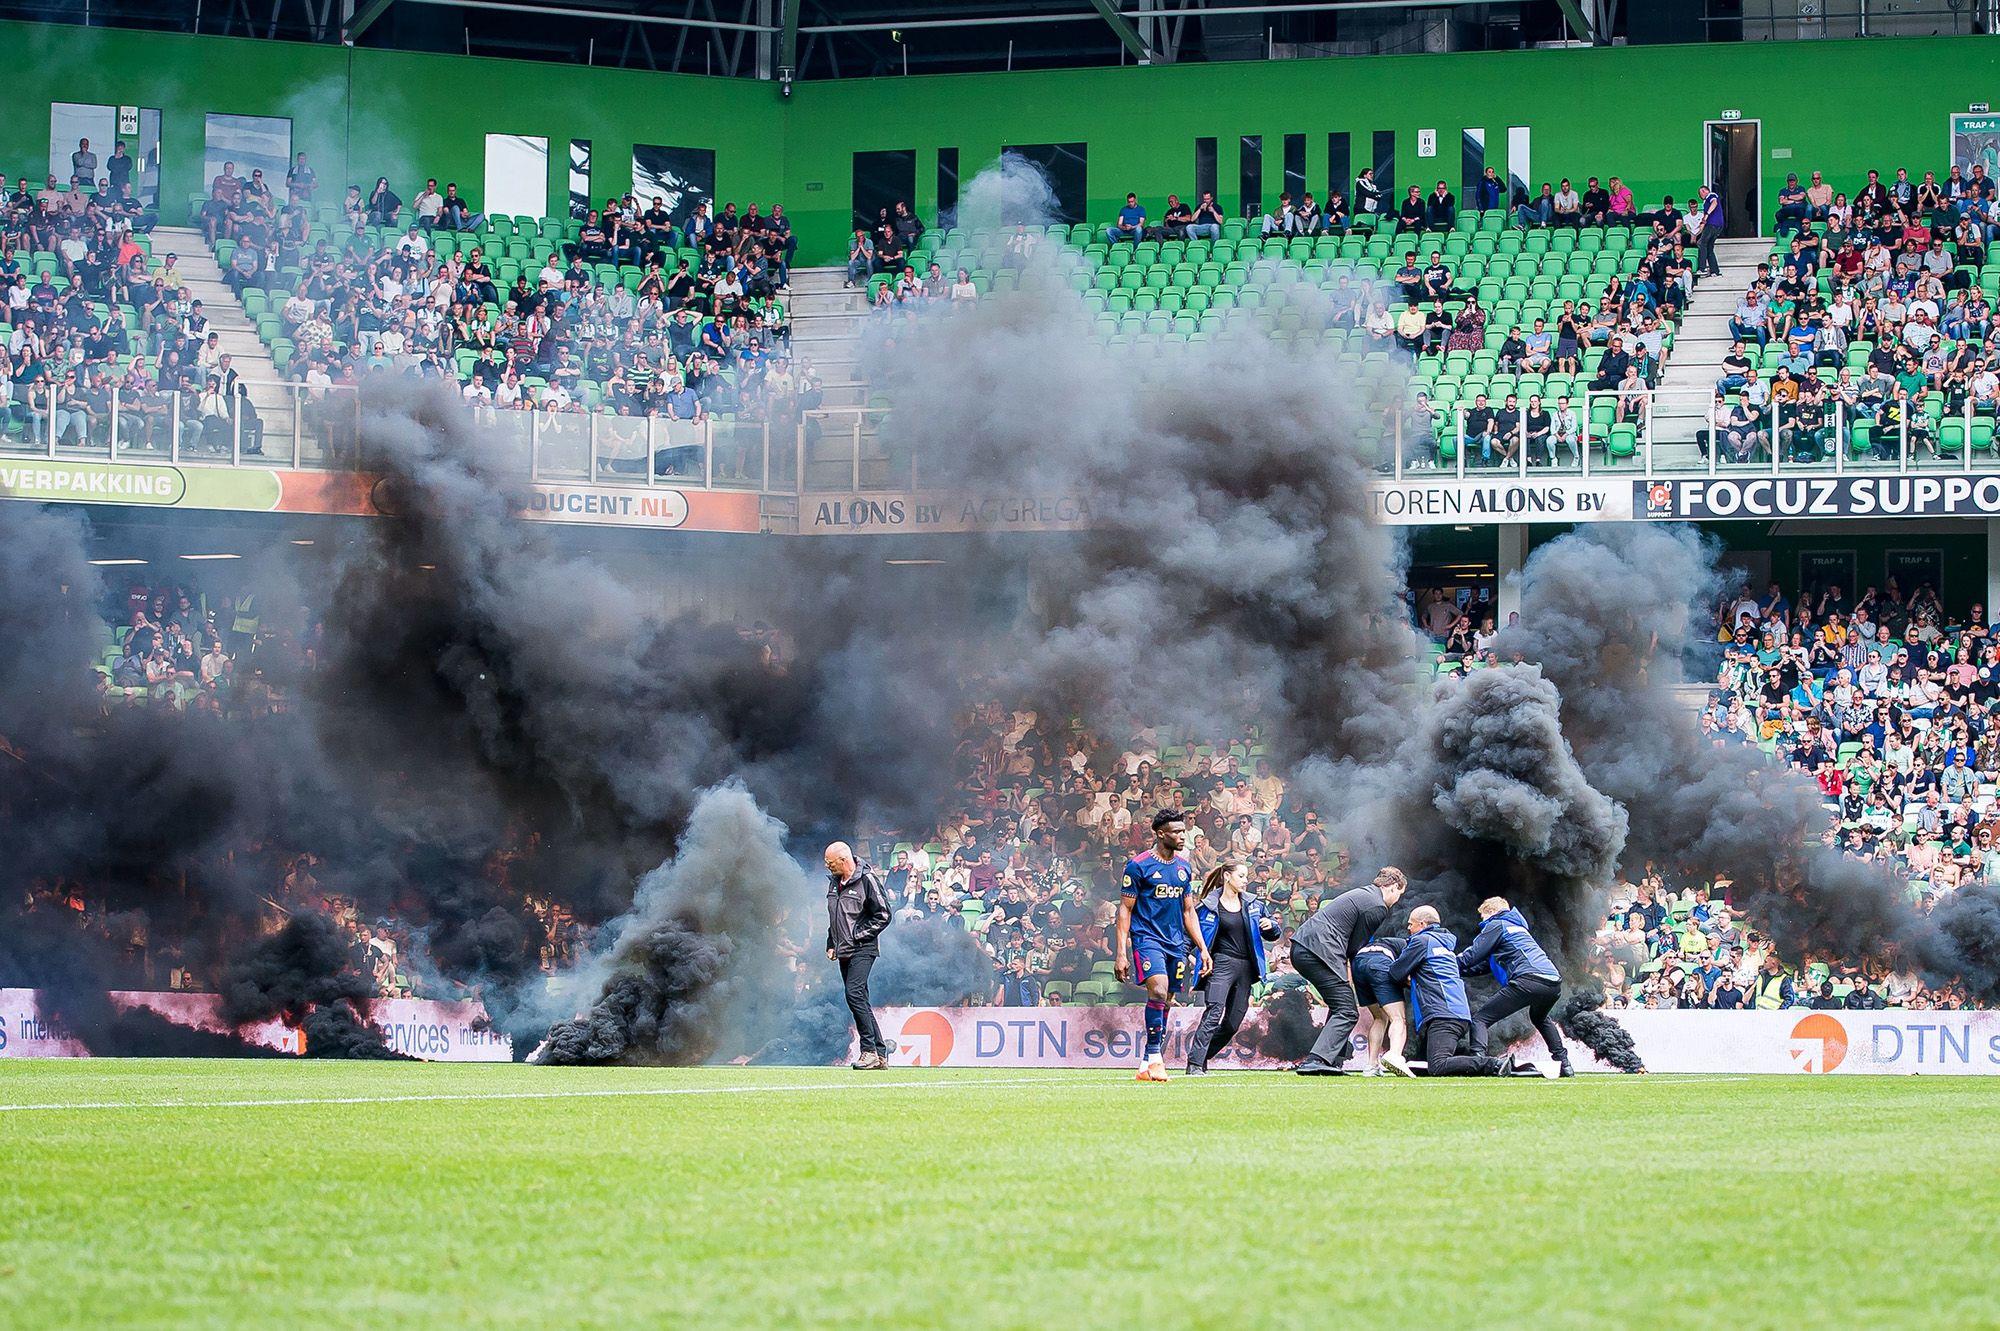 Abandoned Ajax v Feyenoord match set to resume on Wednesday